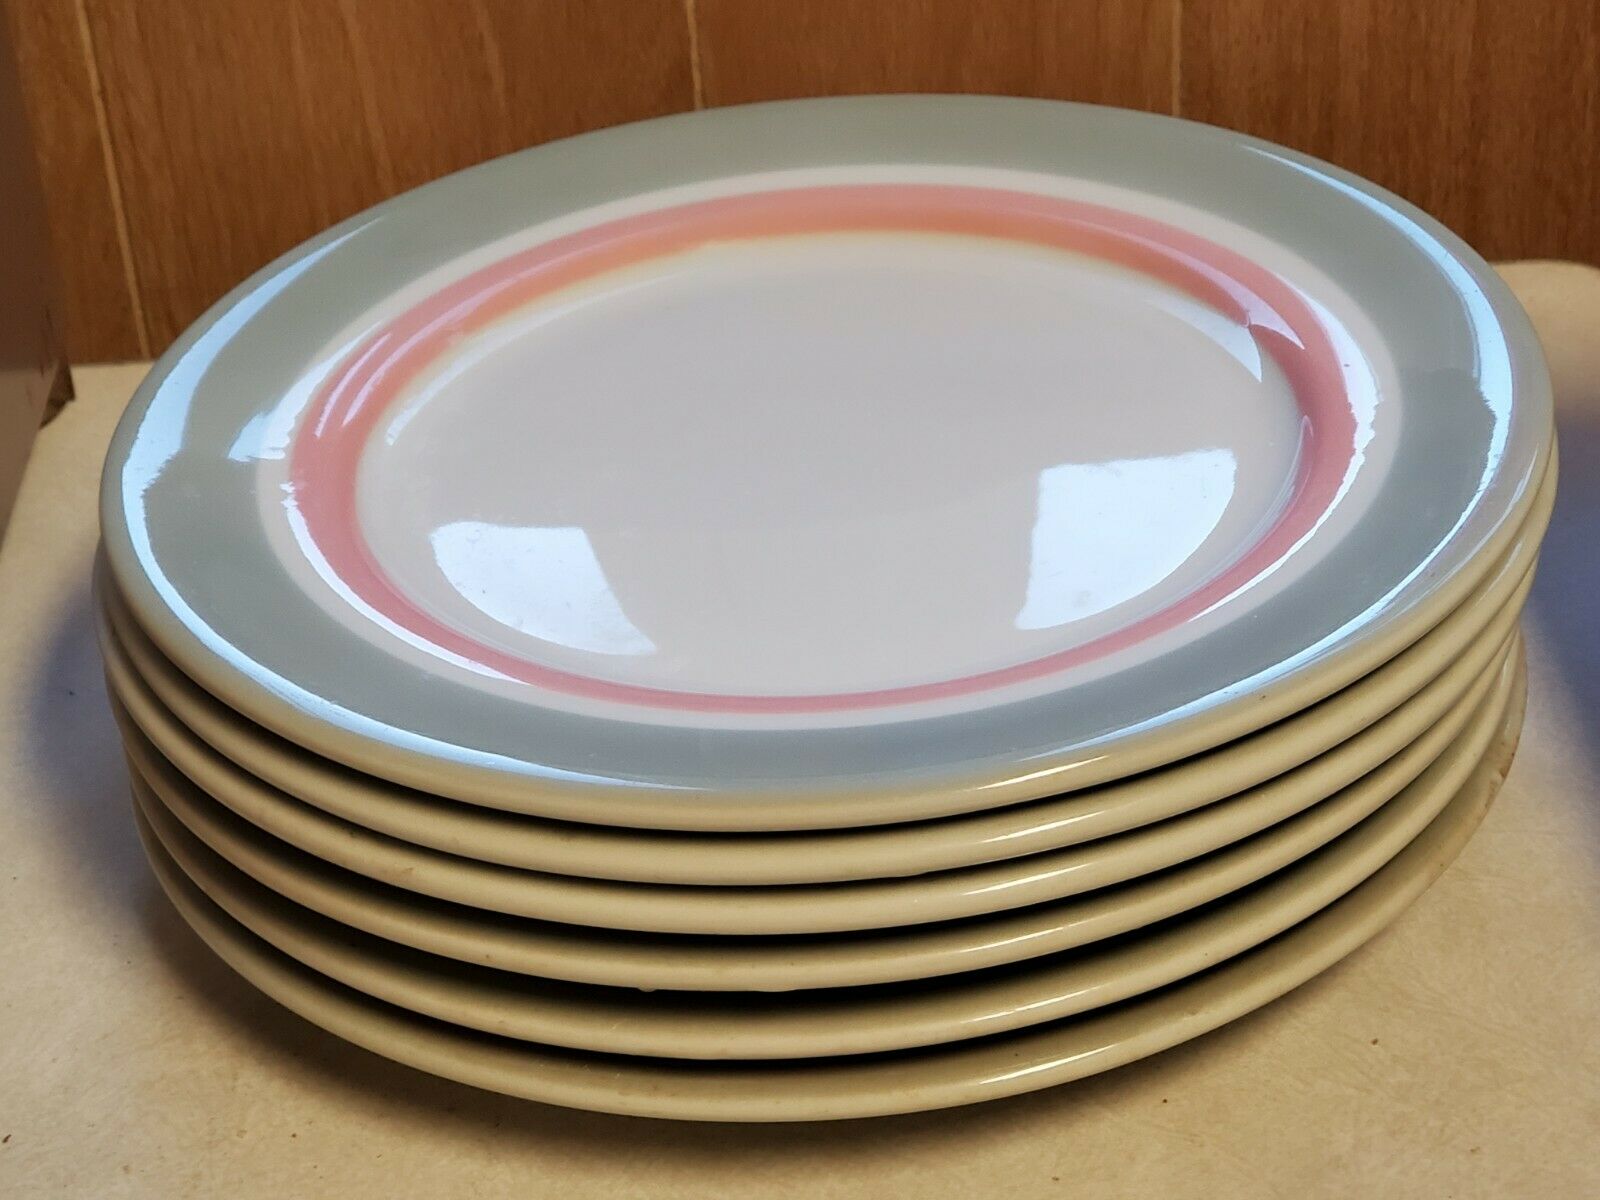 6 Shenango Dinner Plates Restaurant Ware Pink And Grey Gray Stripes - Set Of 6